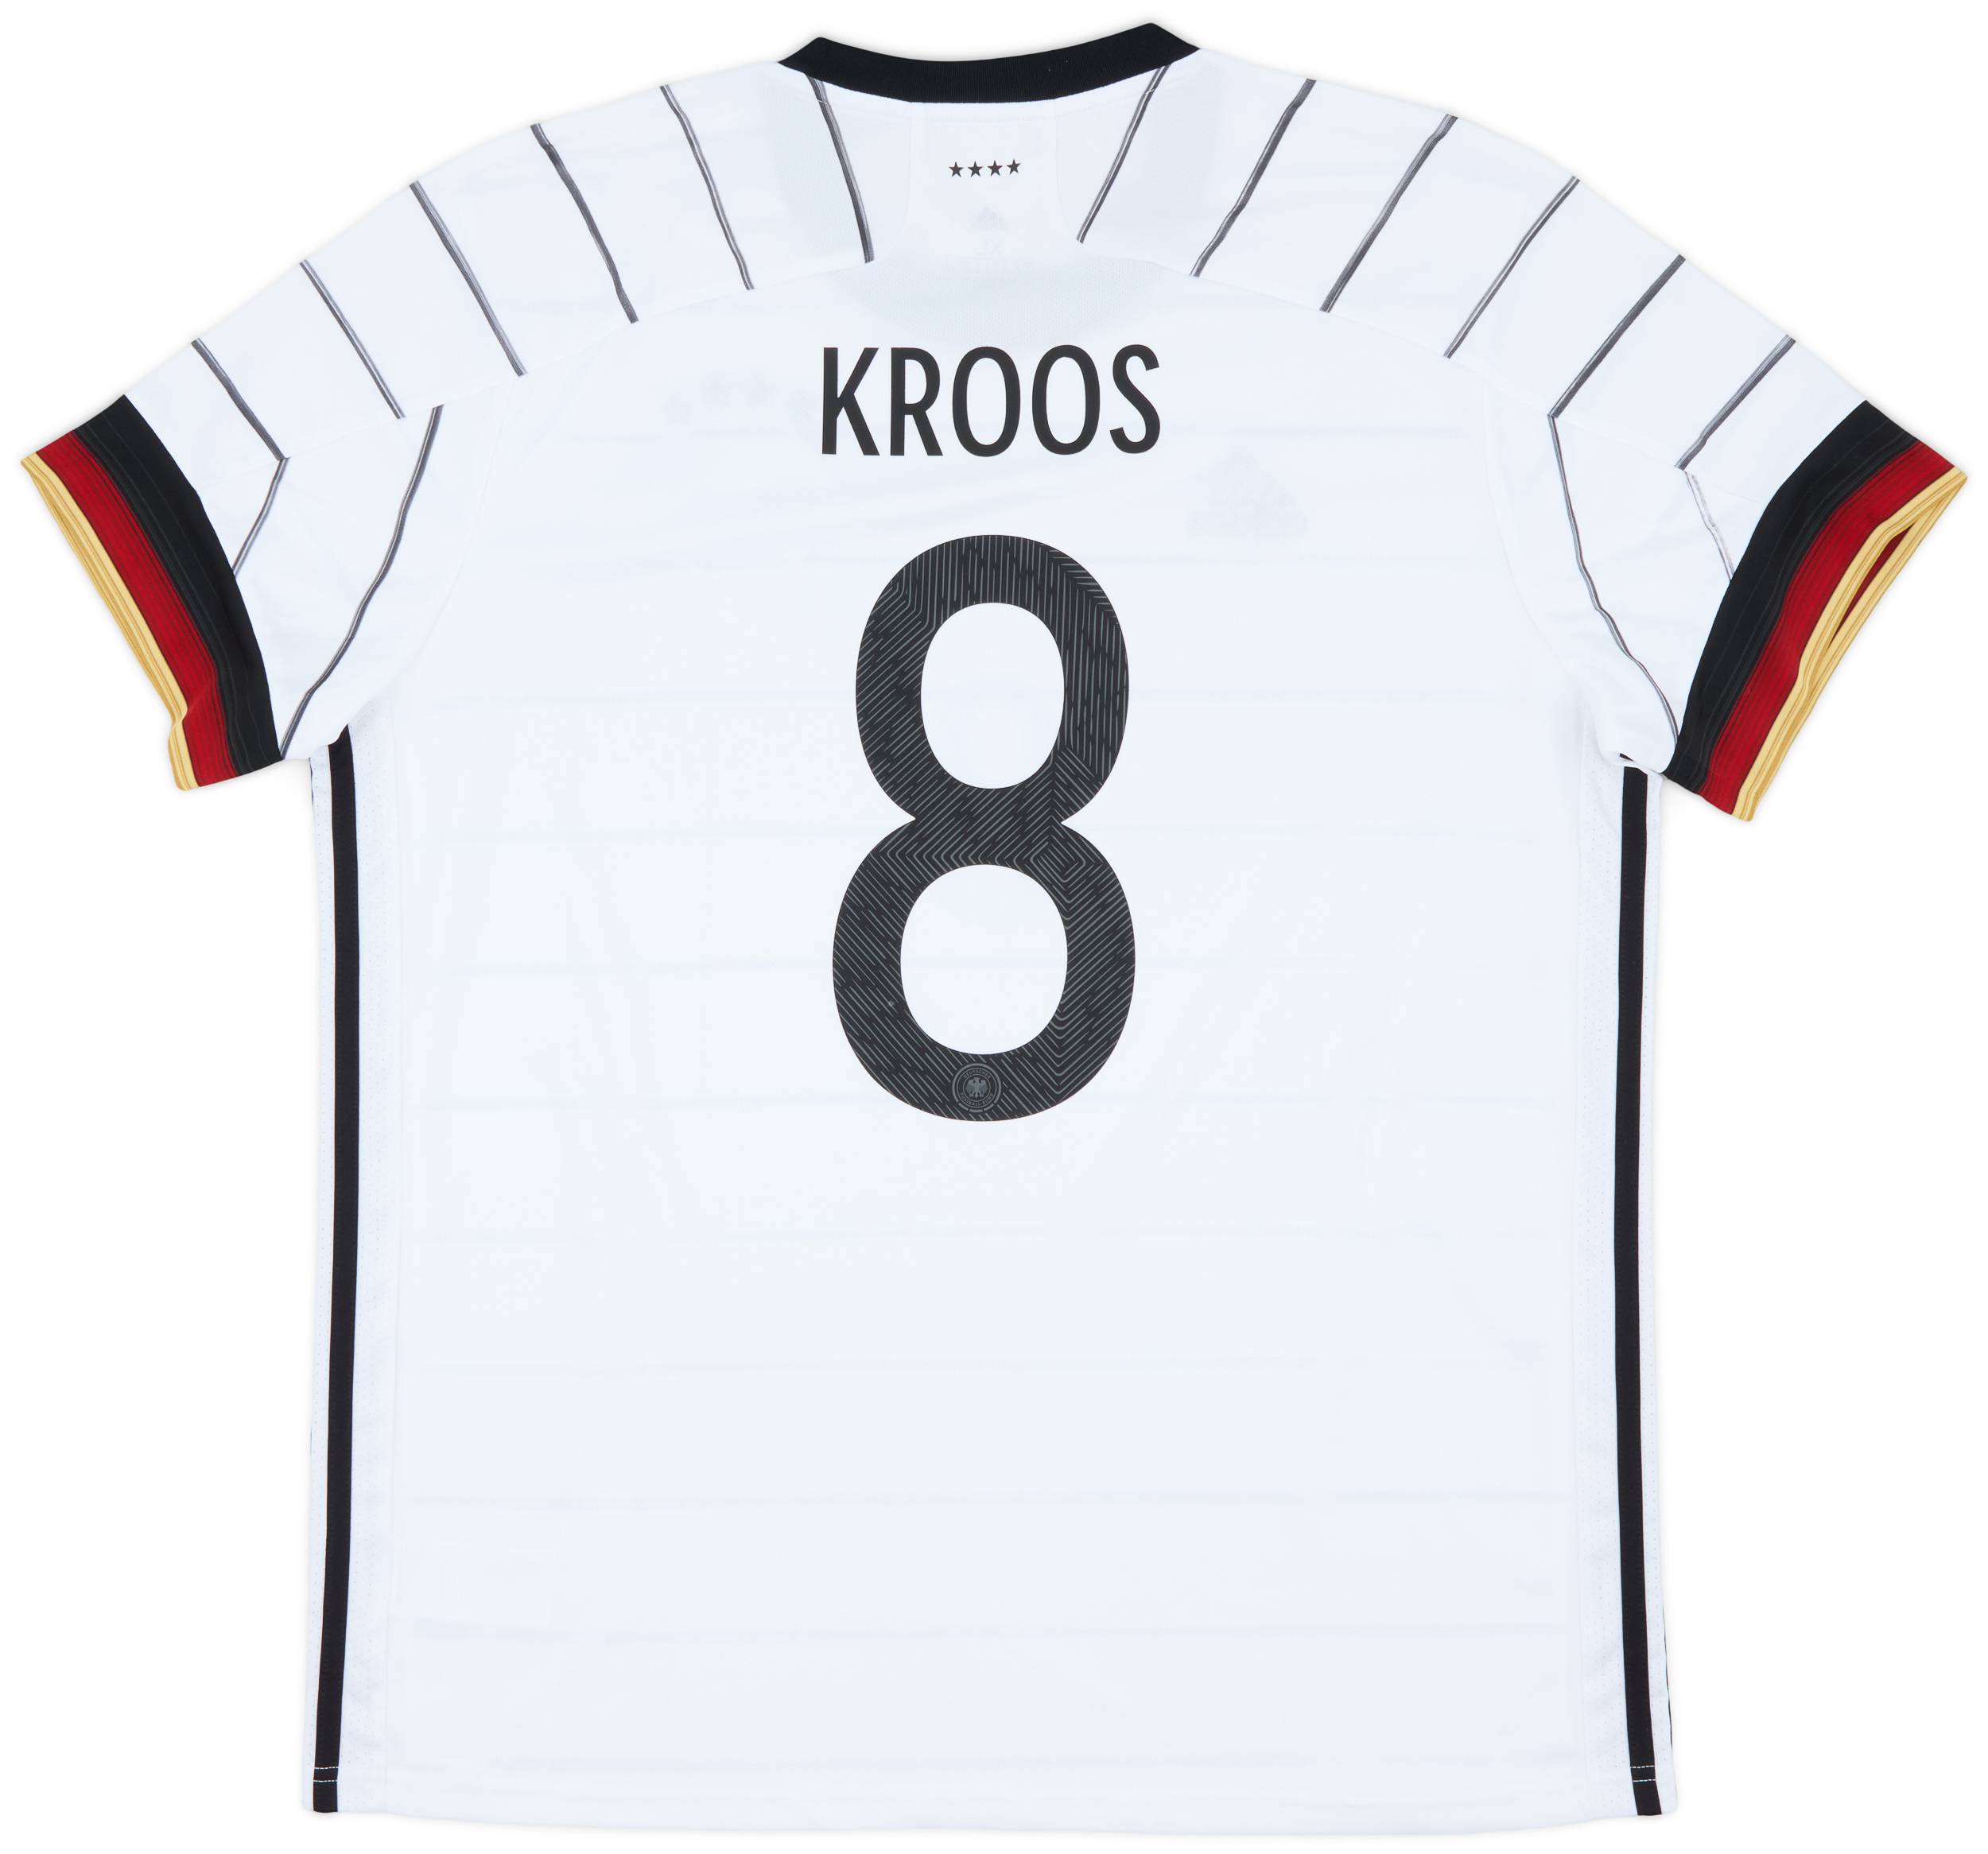 2020-21 Germany Home Shirt Kroos #8 - 9/10 - (XL)